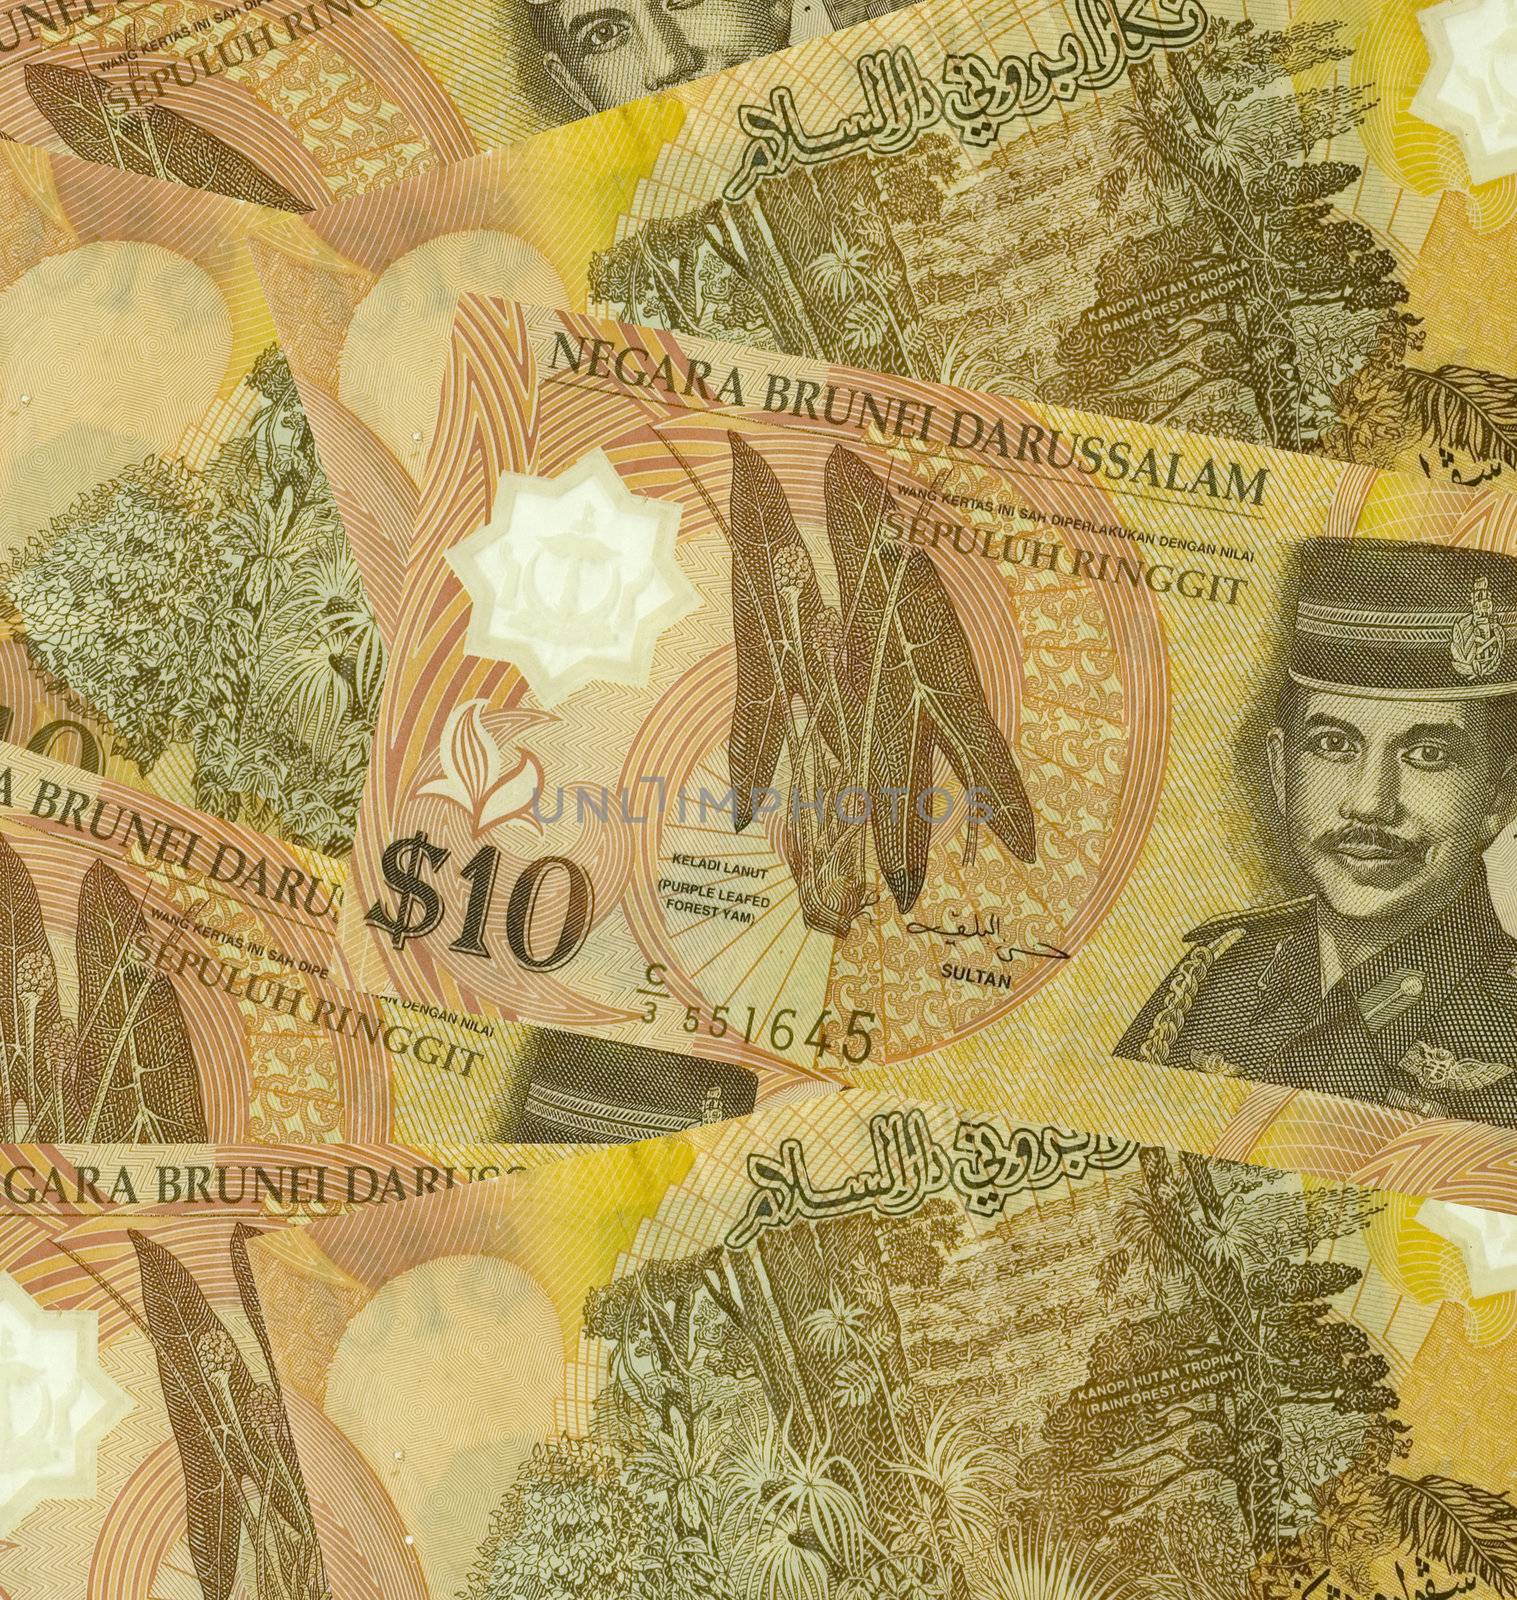 Brunei darussalam currency